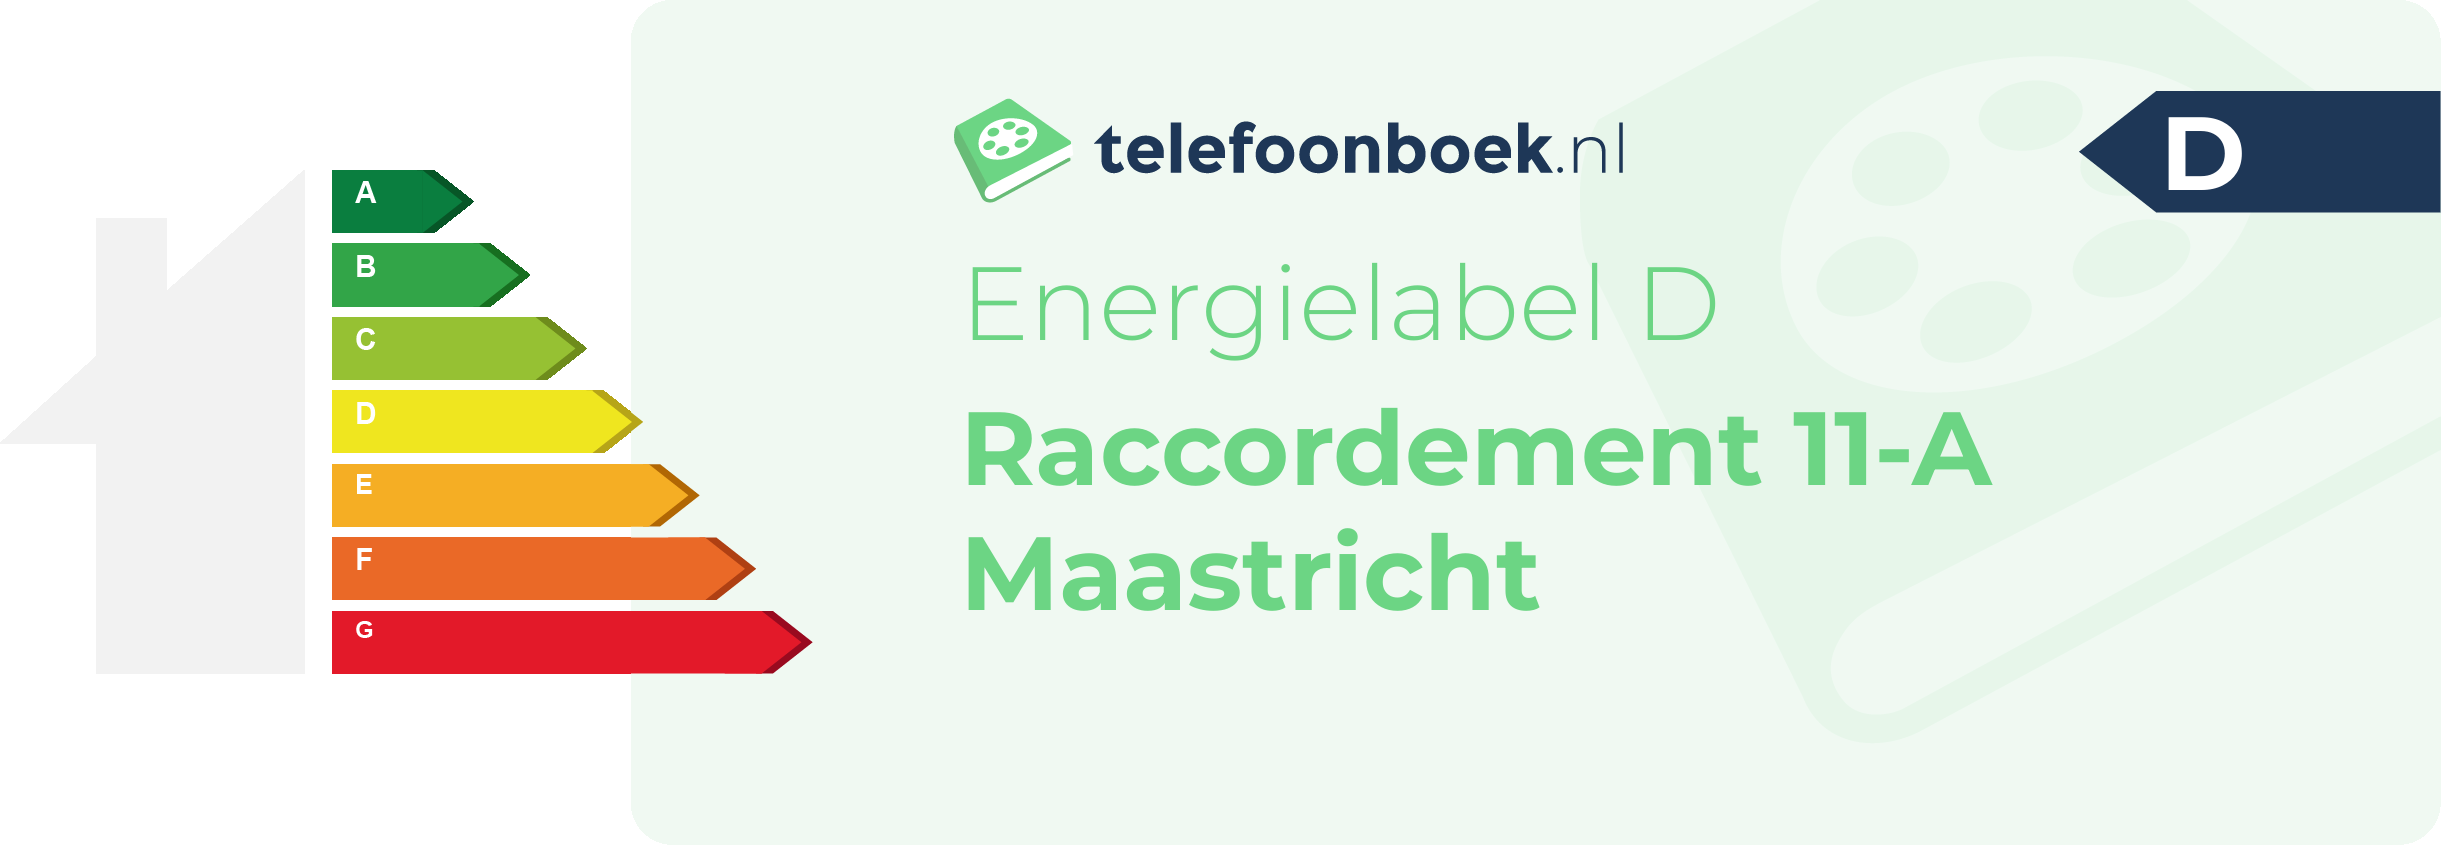 Energielabel Raccordement 11-A Maastricht